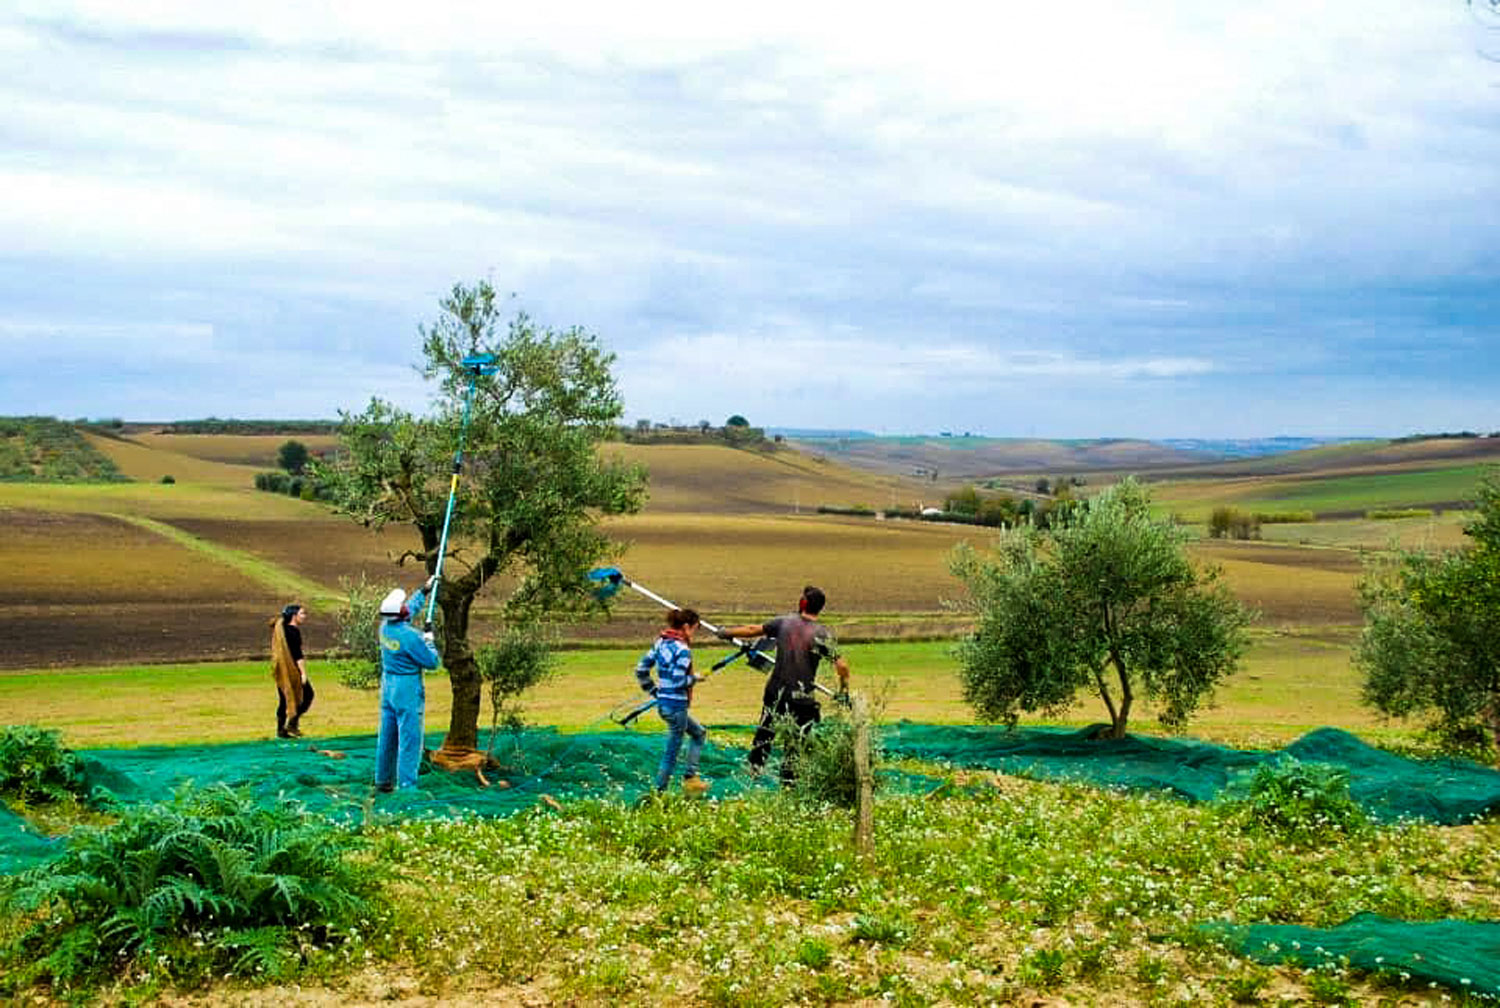 People harvesting olives off a tree.